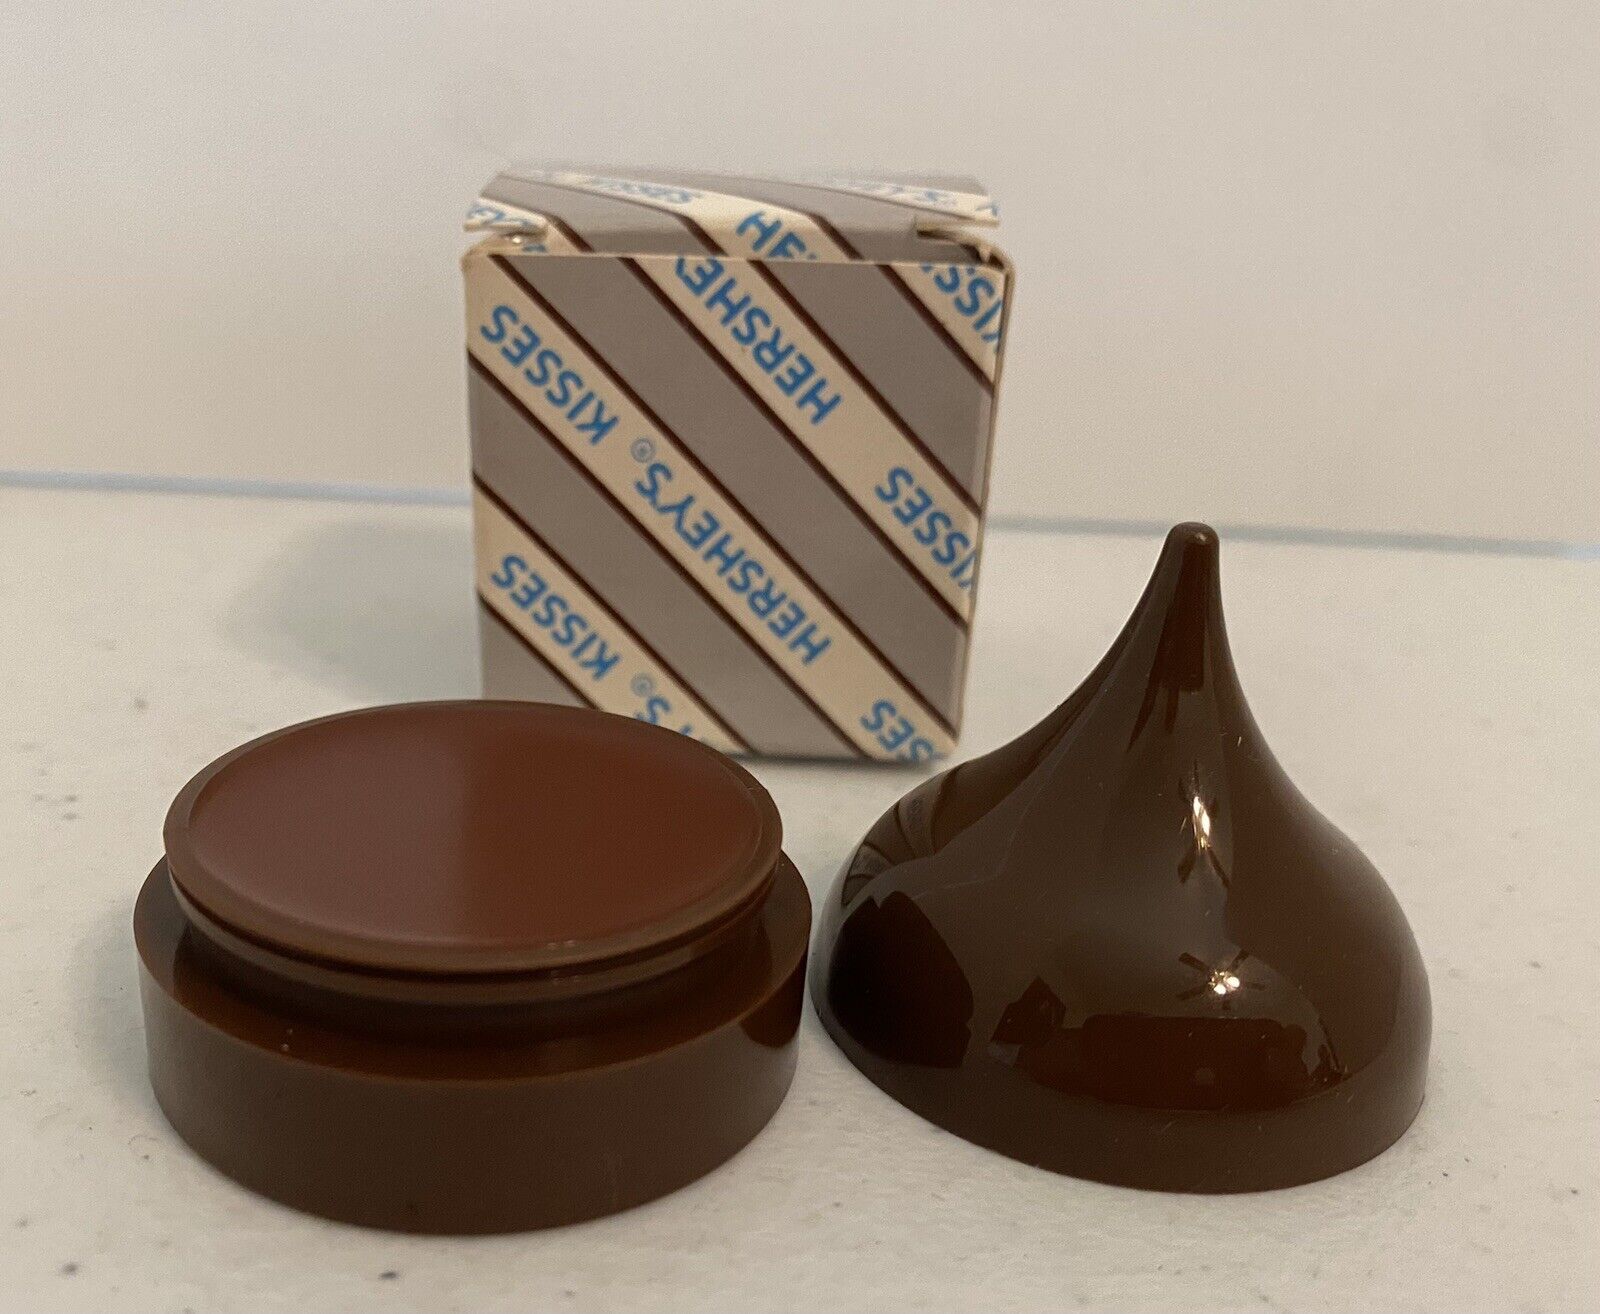 Vintage Avon Hershey’s Kiss Chocolate Lip Gloss Compact New In Box